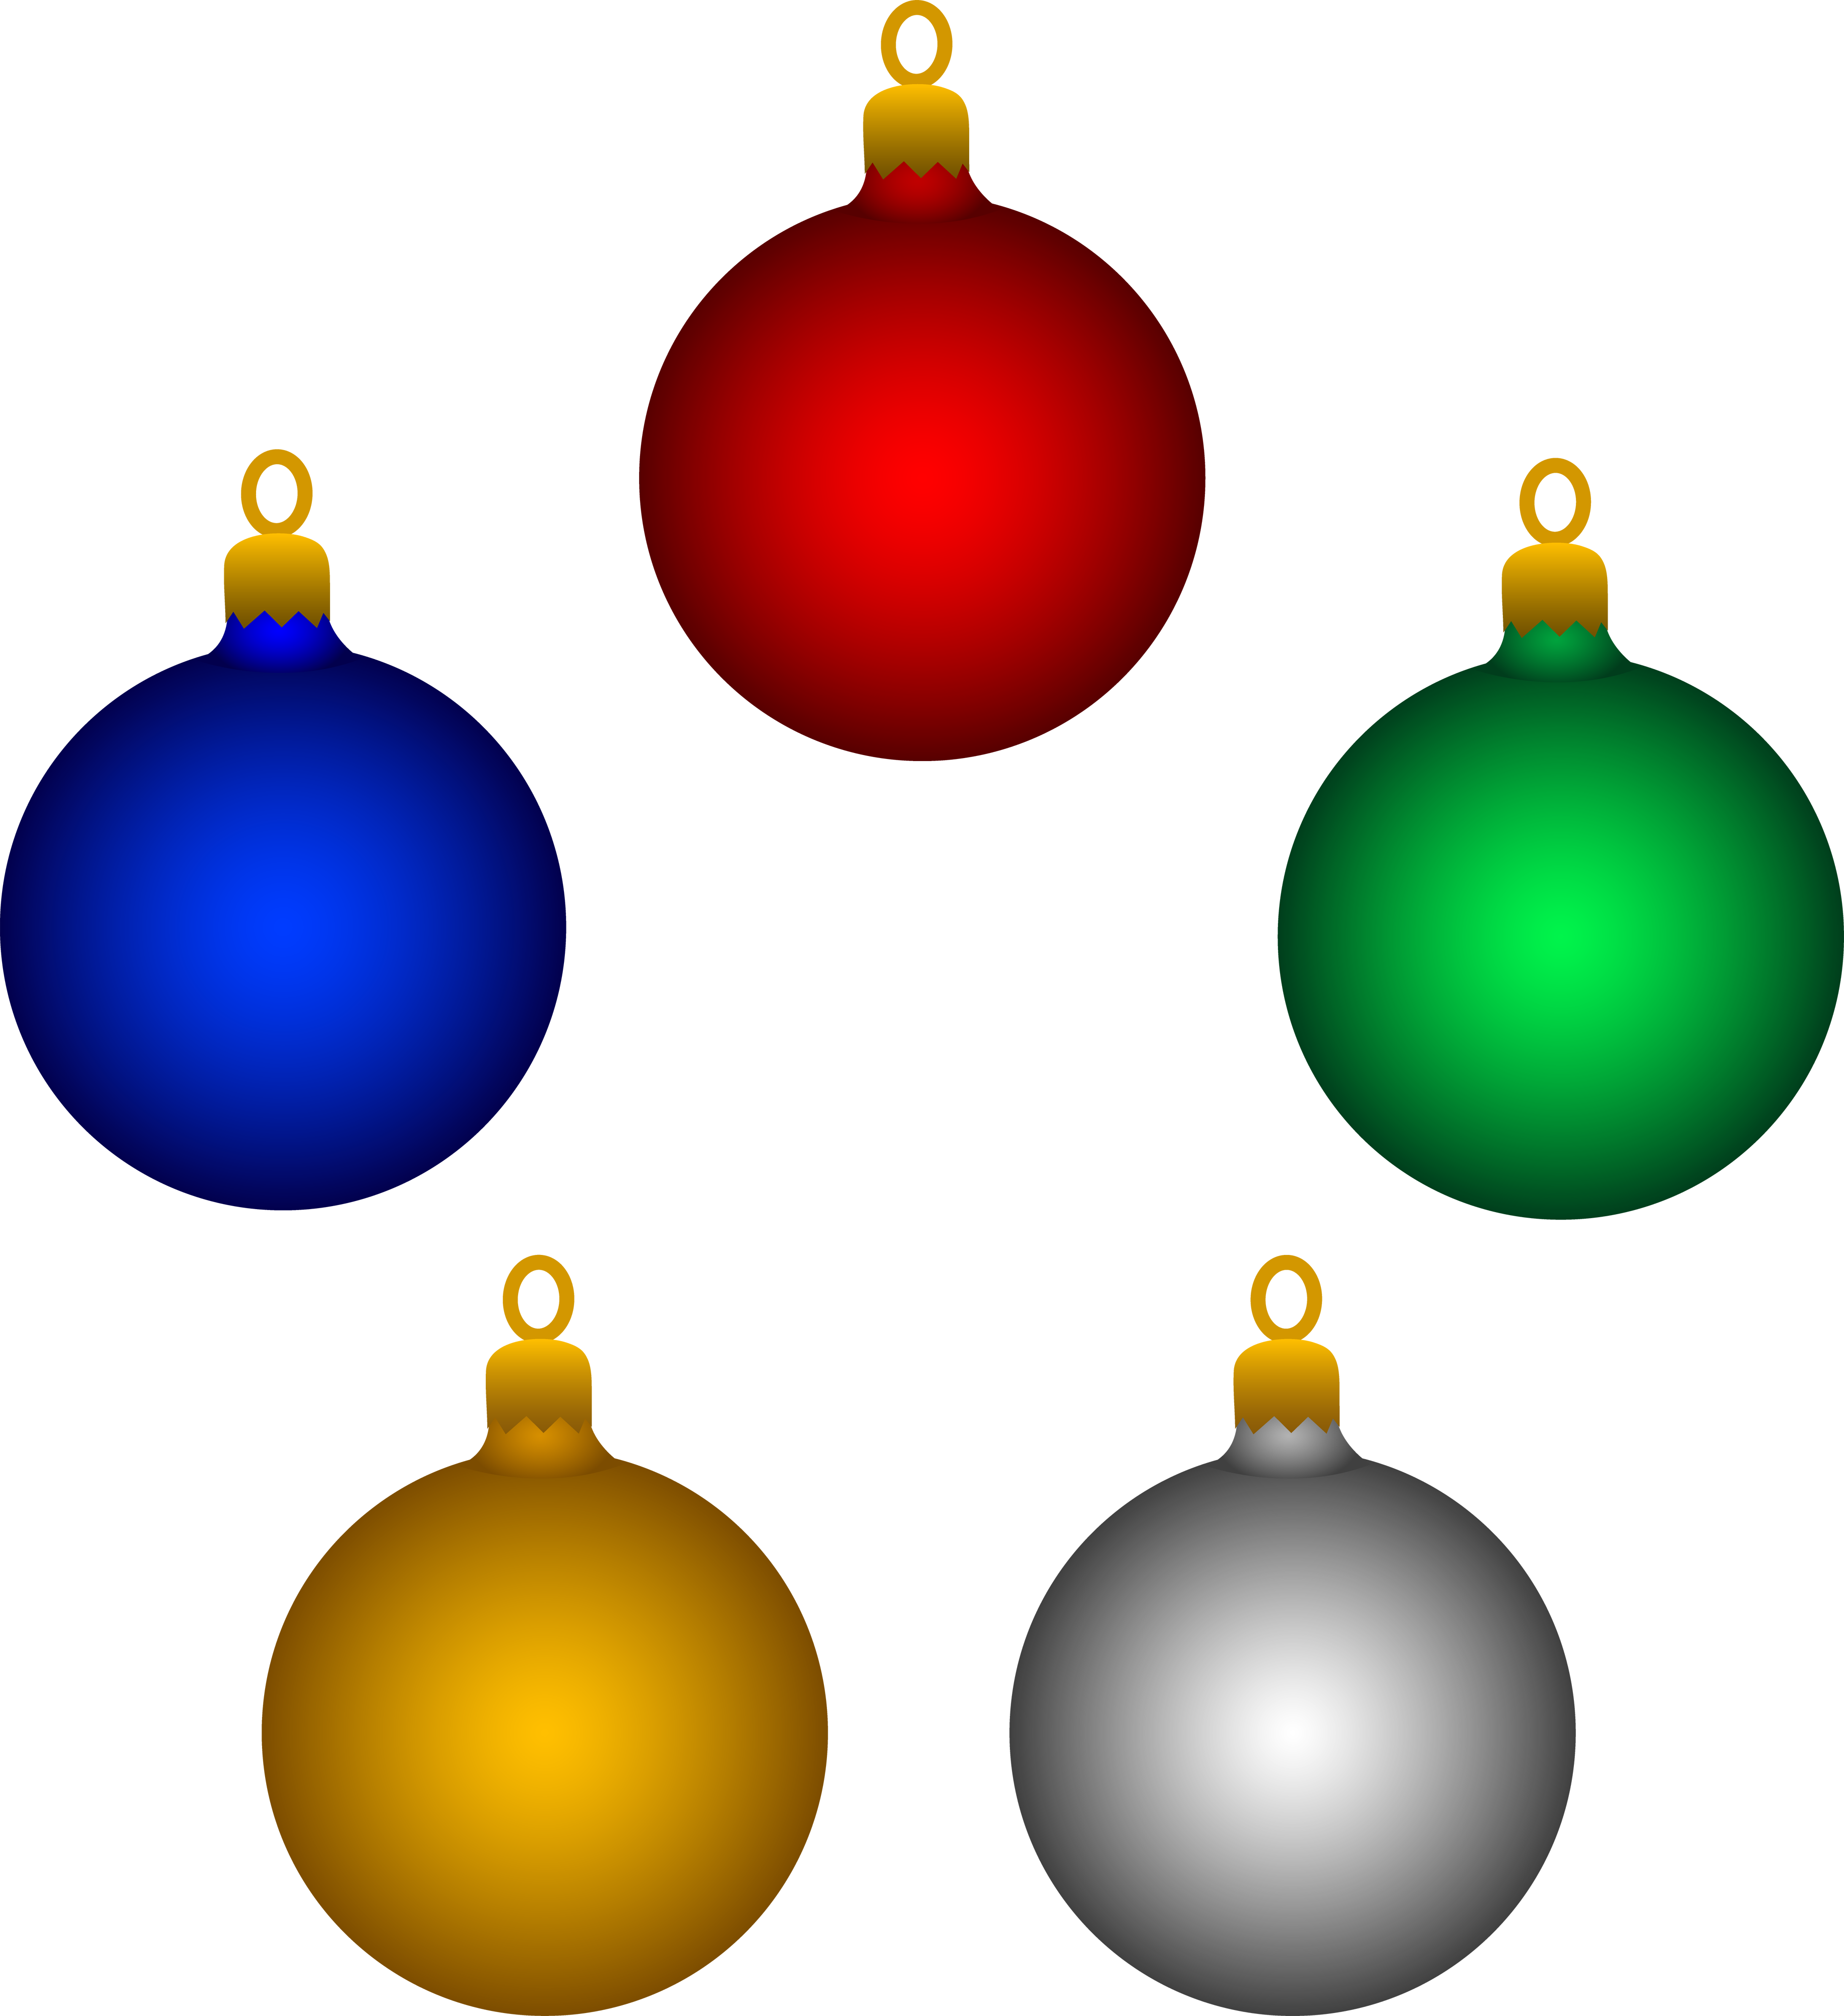 Five Shiny Christmas Tree Ornaments - Free Clip Art